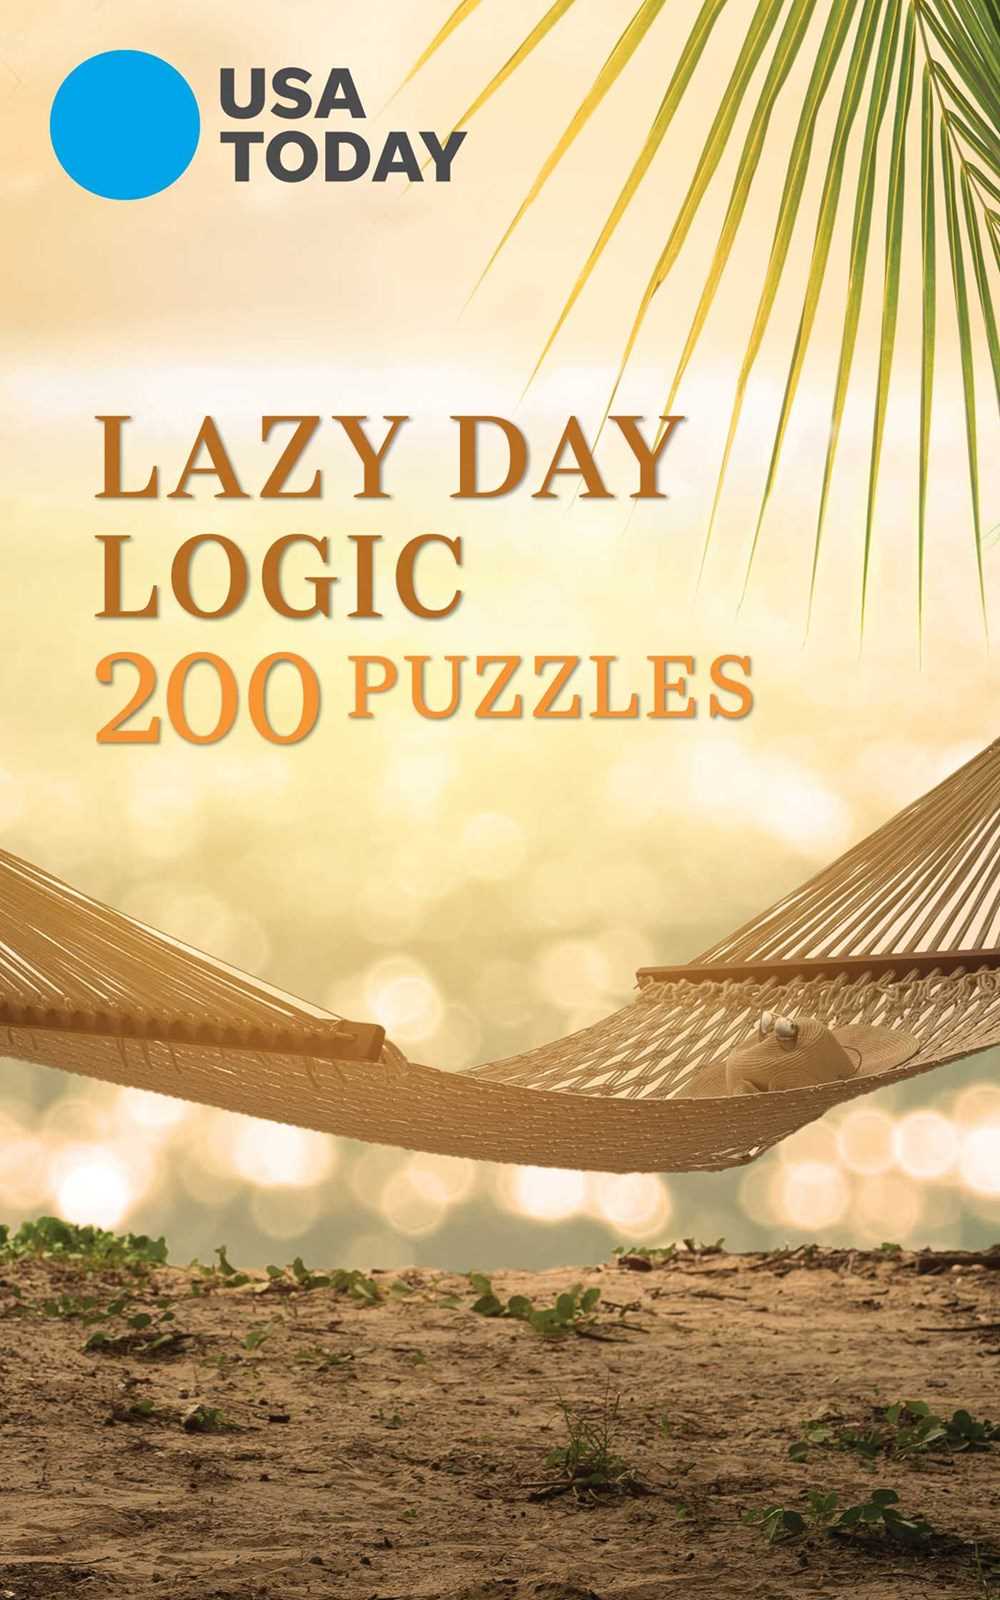 USA TODAY Lazy Day Logic